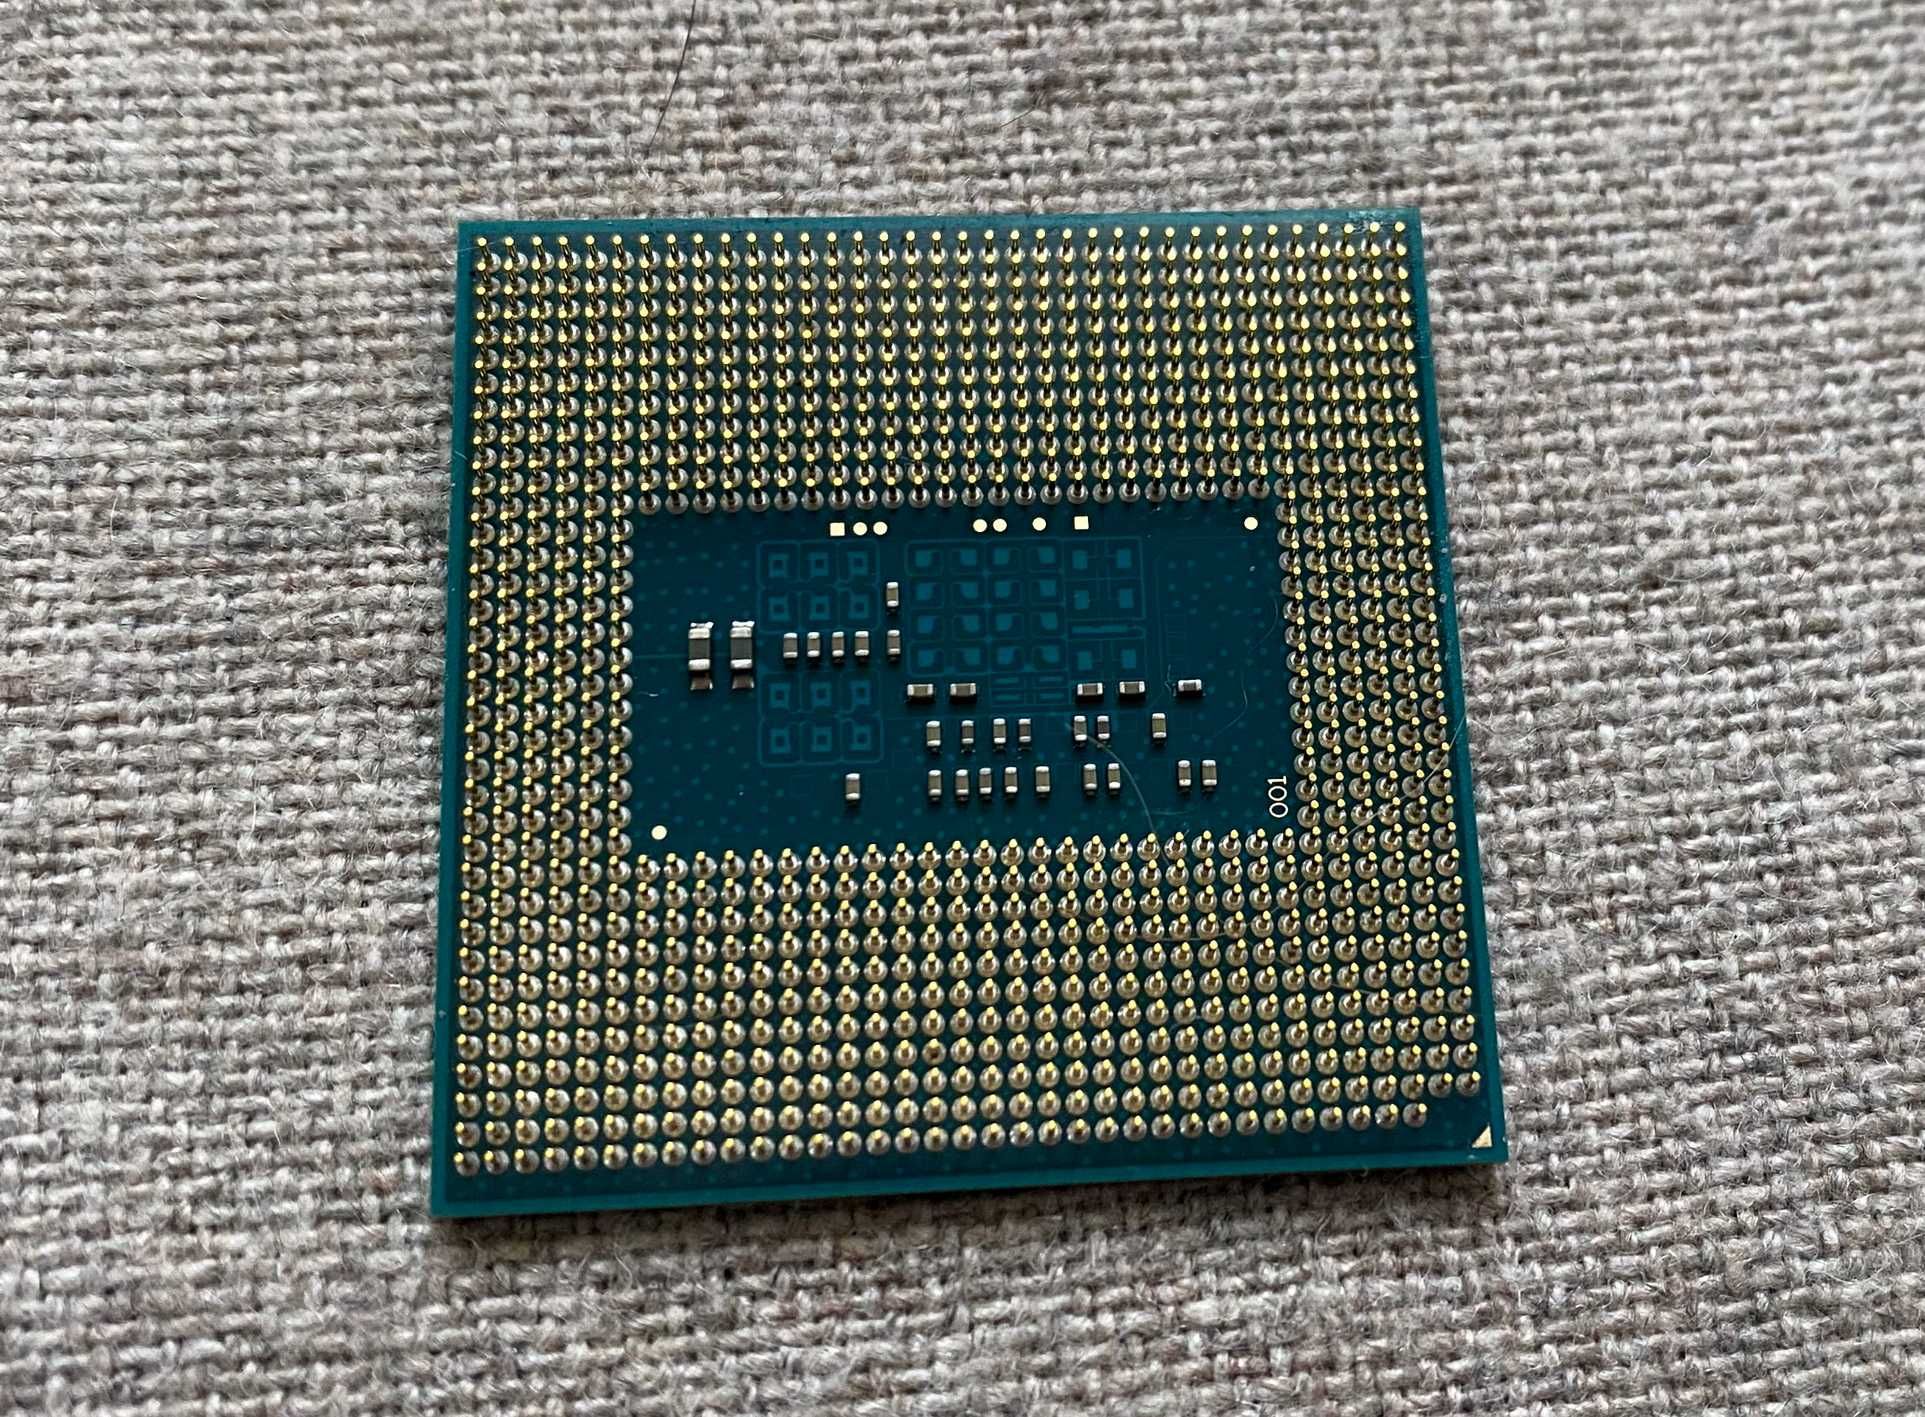 Procesor laptop SR1L2 Intel Core i5-4310M - probat si verificat